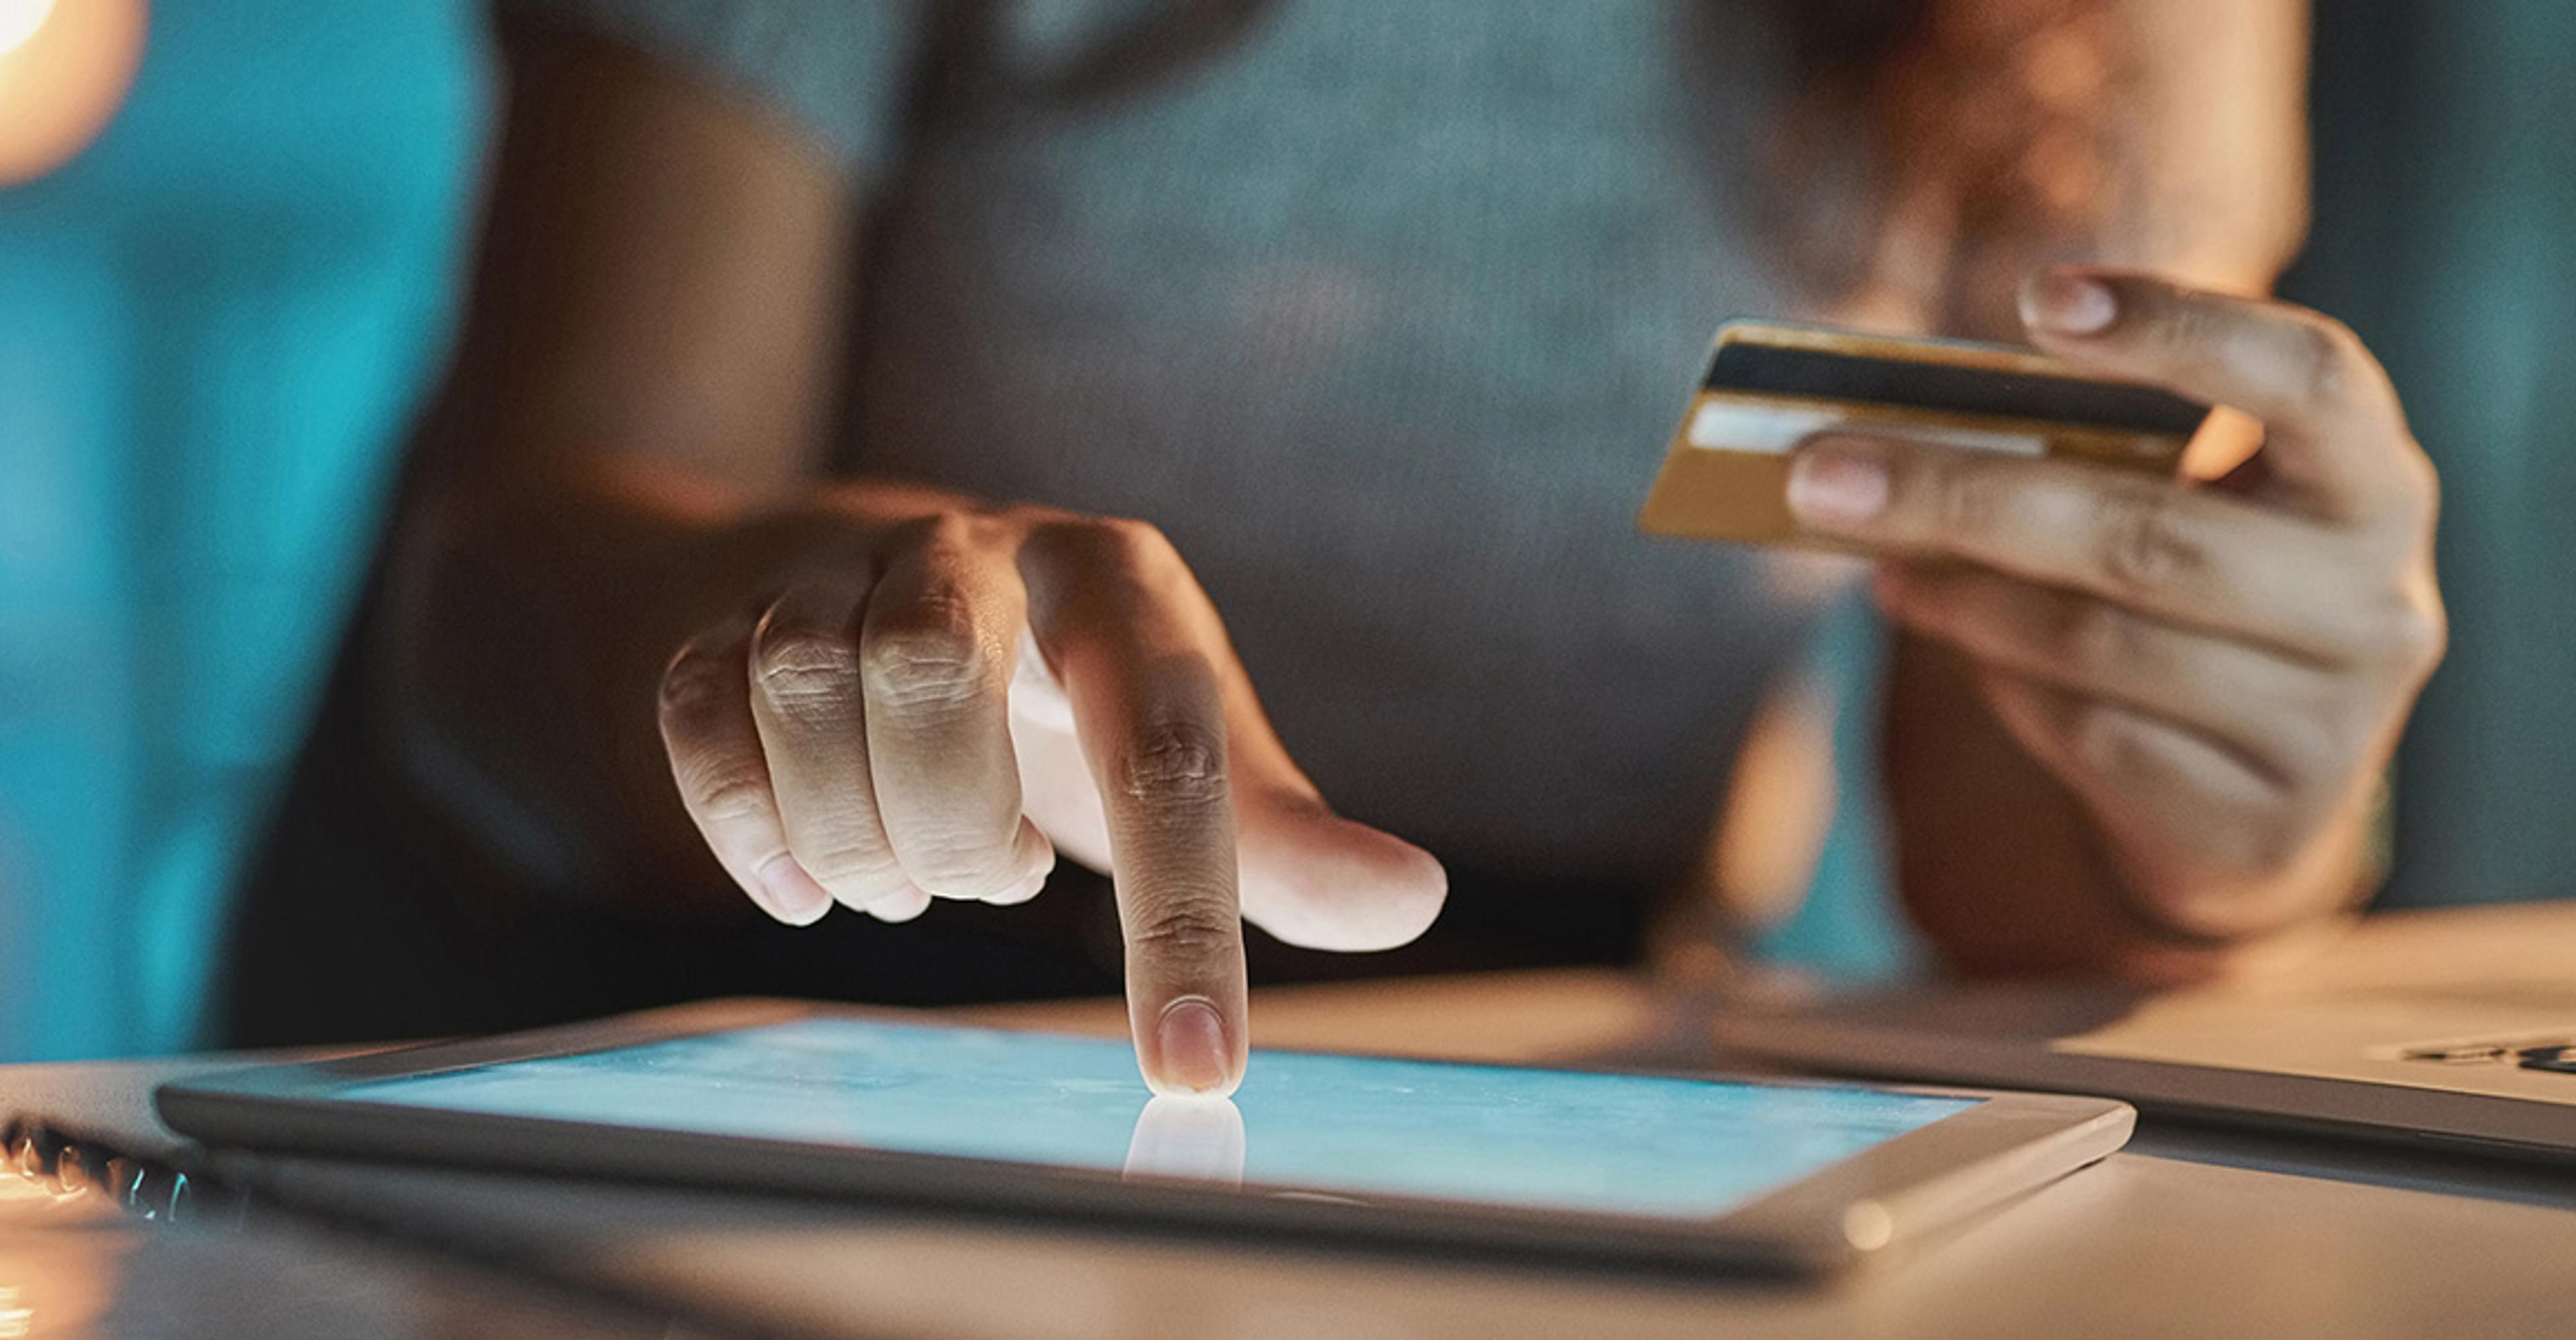 An online shopper entering credit card information into a tablet